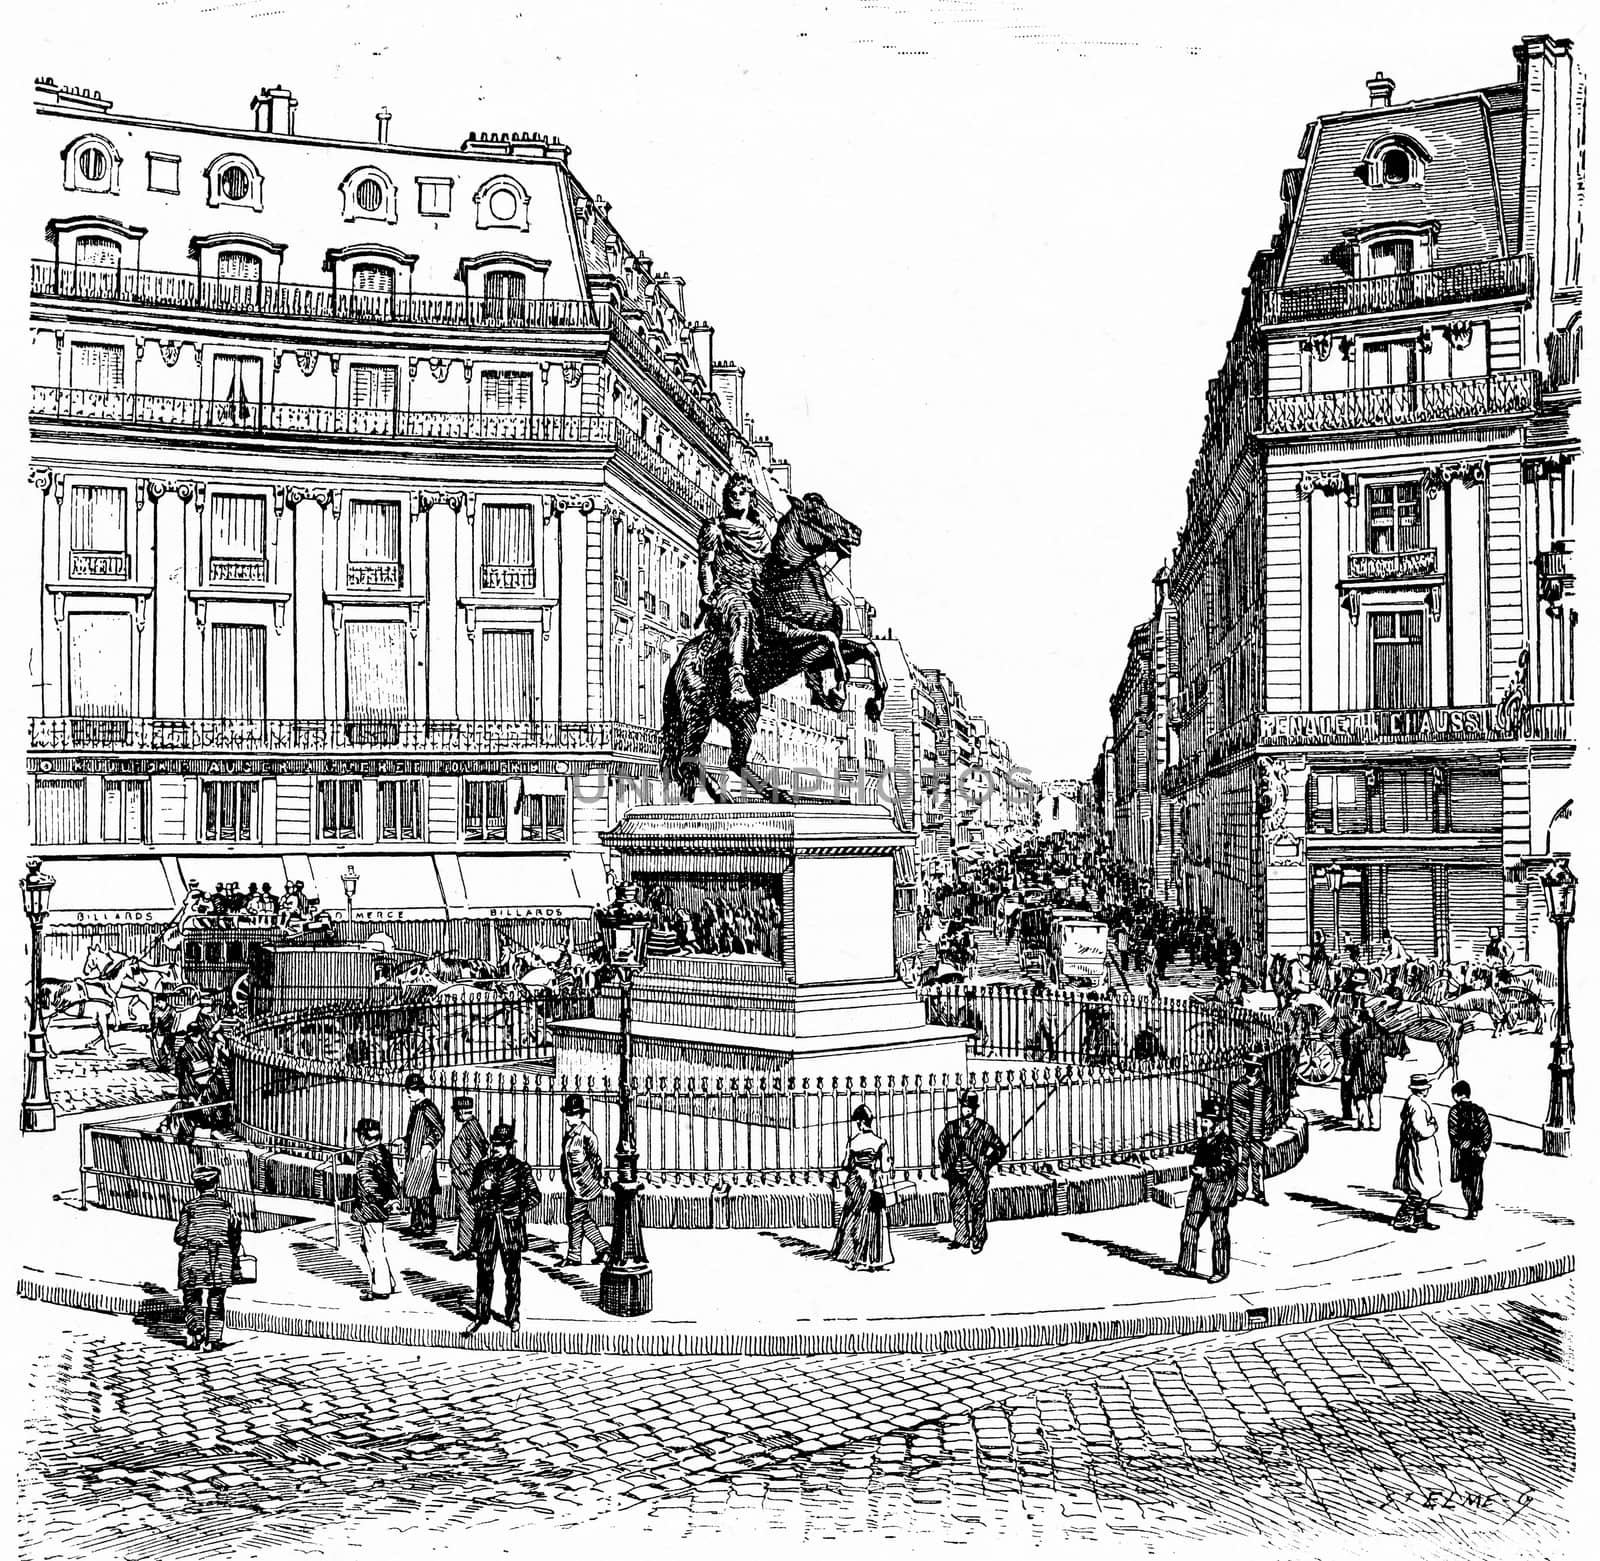 Place des Victoires, vintage engraving. by Morphart